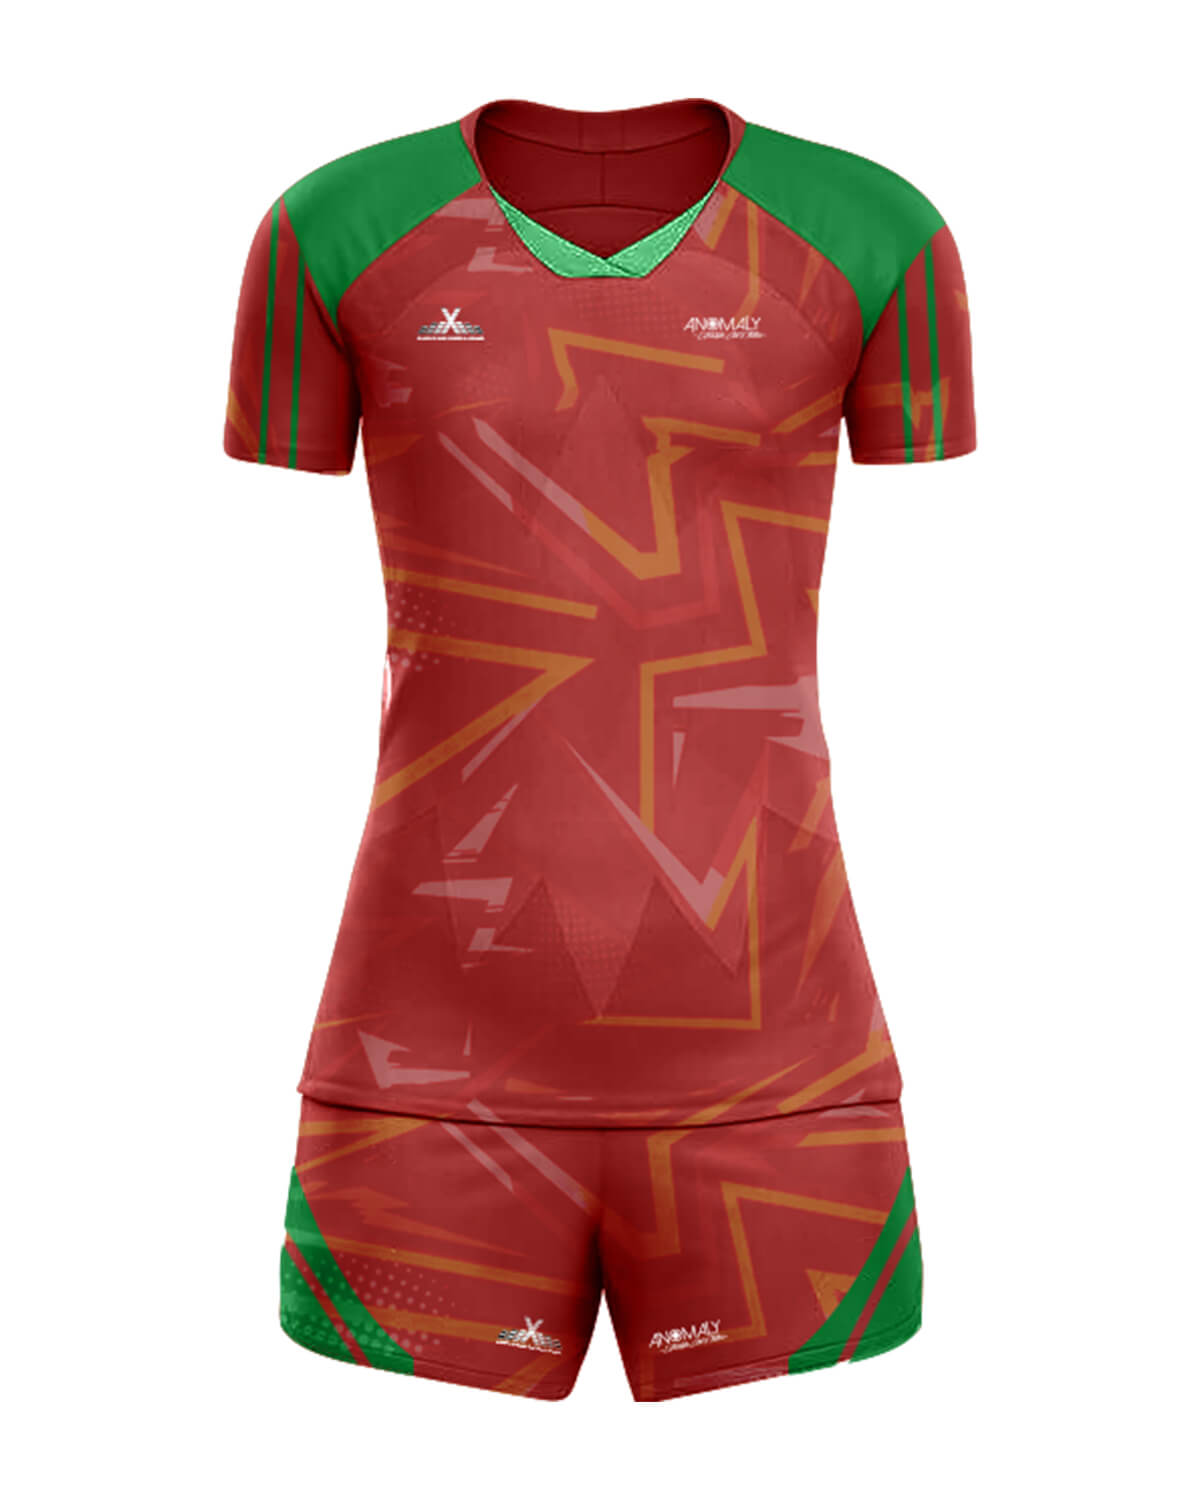 Sublimation Custom Soccer Uniform